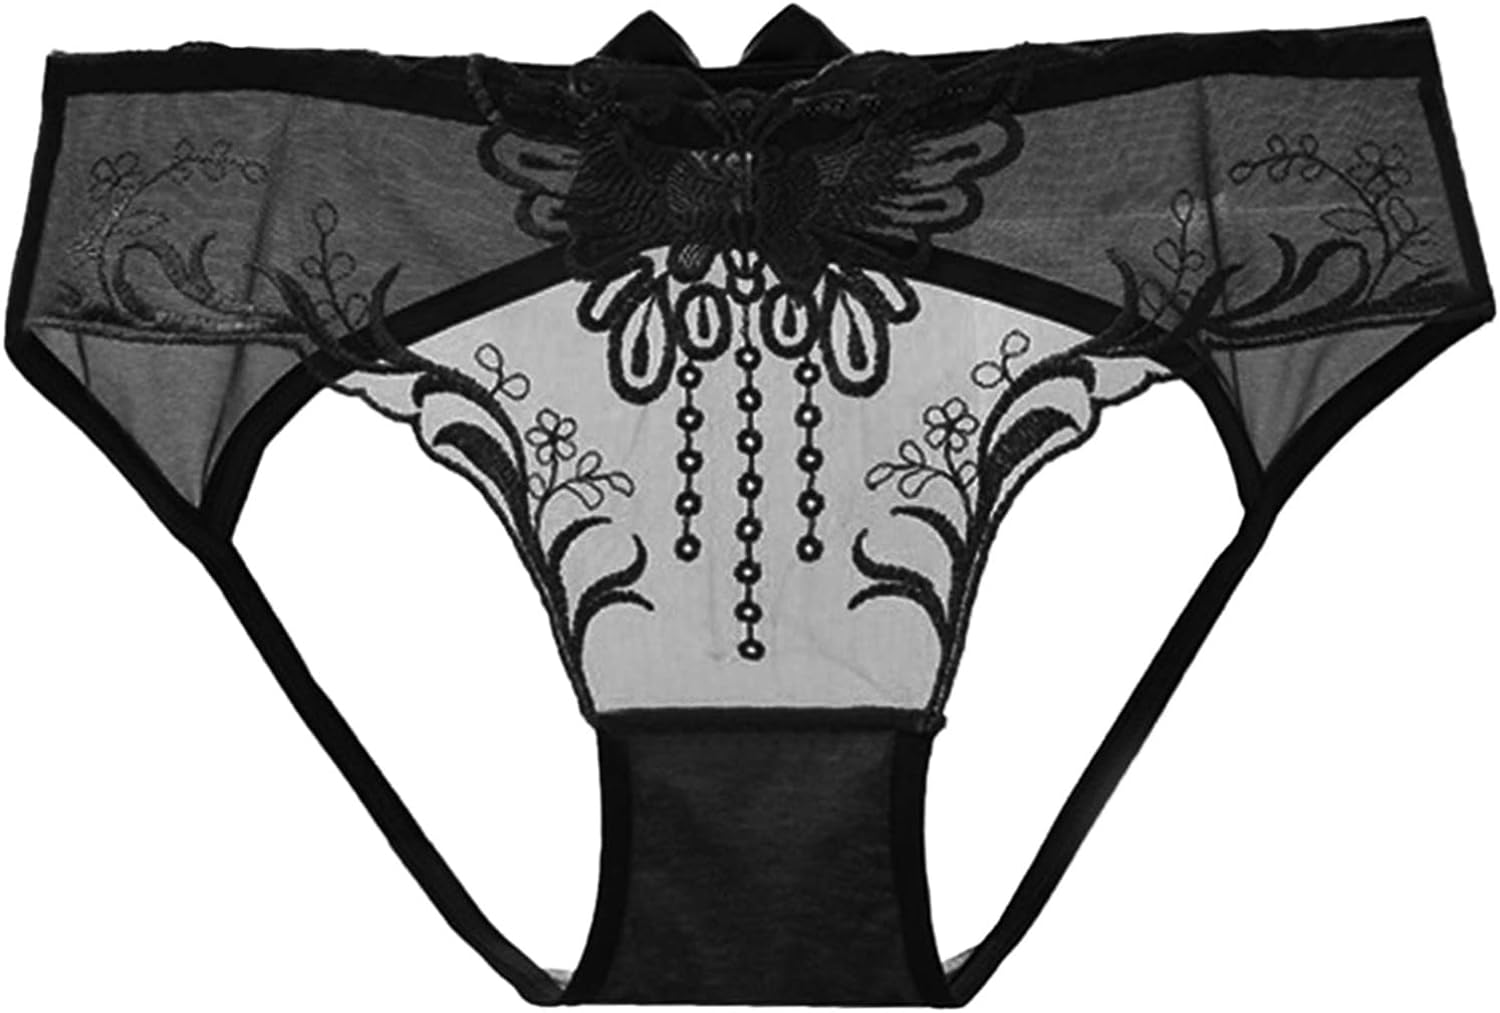 Avidlove Cheeky Underwear for Women 4 Packs Meduim Waist Undies Lace  Seamless Hipster Panty at  Women's Clothing store